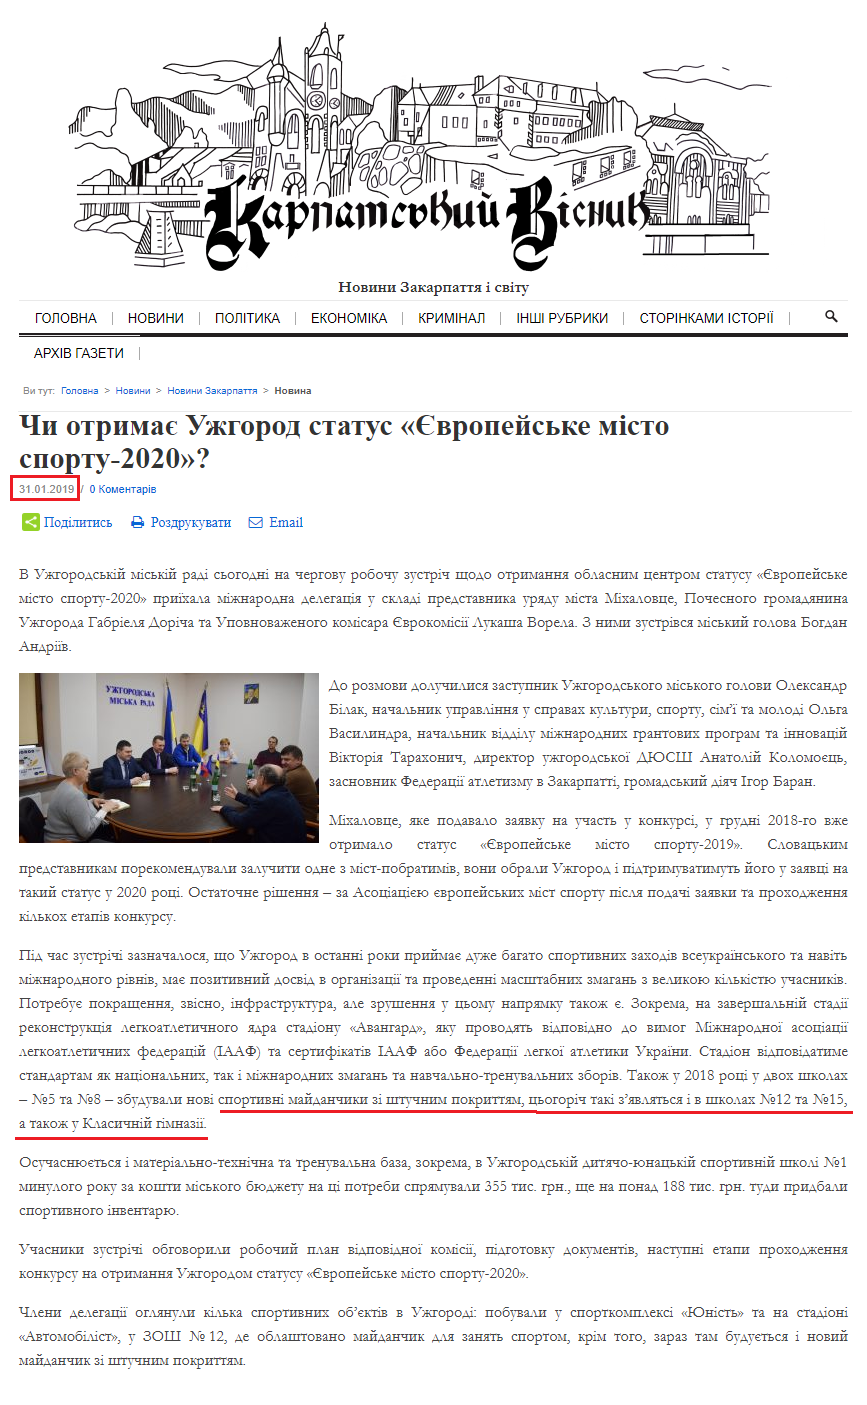 http://karpatvisnuk.com.ua/all-news/transkarpatia/chi-otrimaye-uzhgorod-status-yevropejske-misto-sportu-2020.html